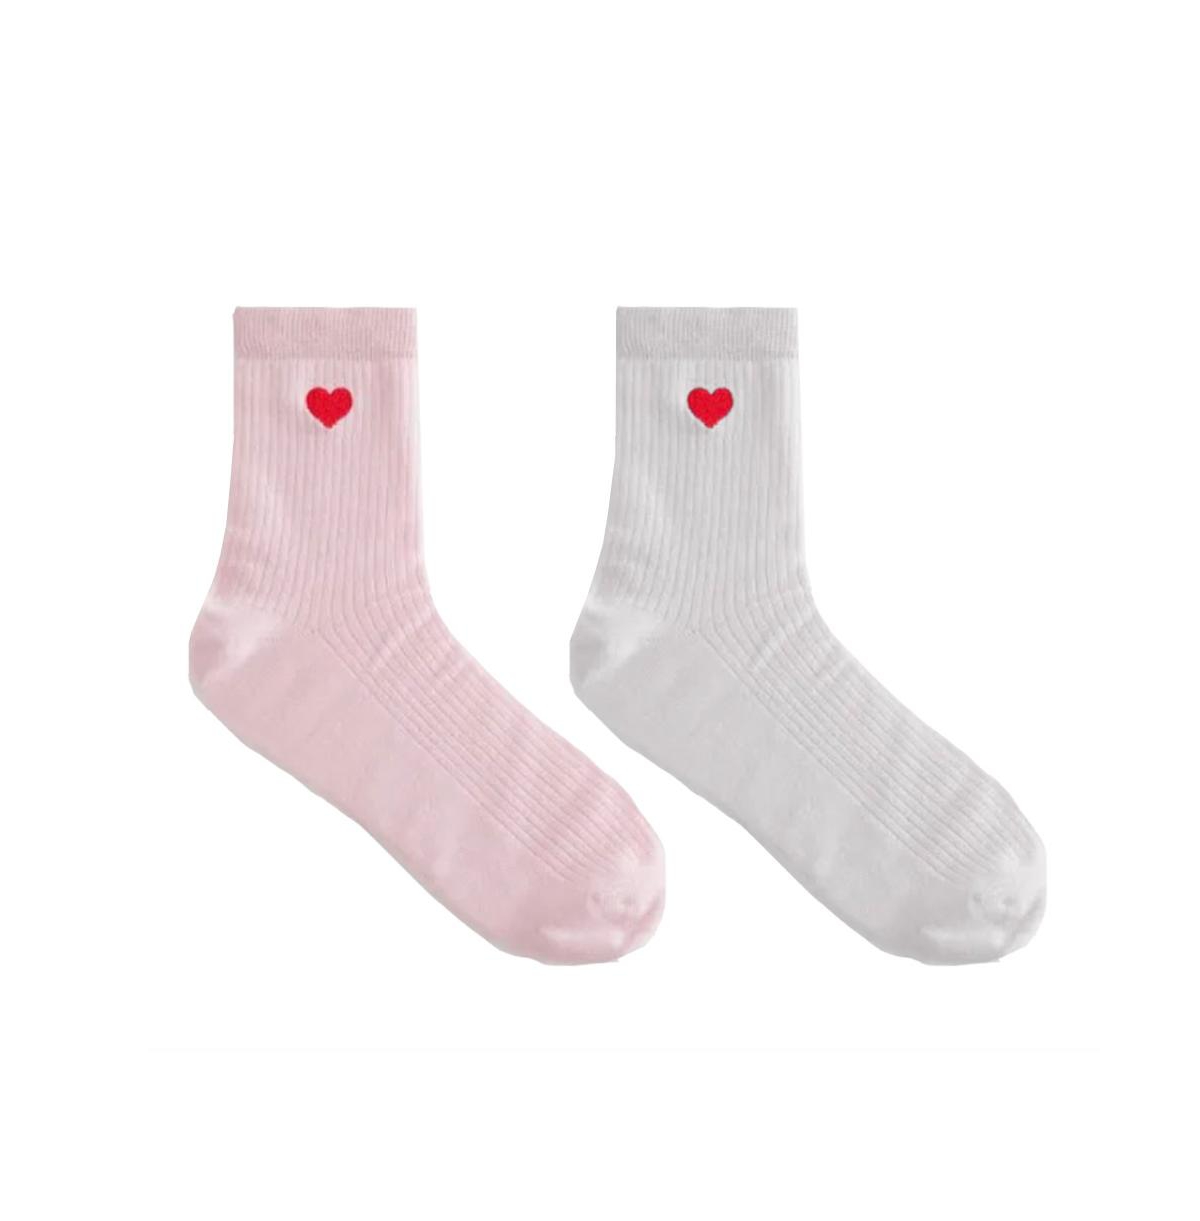 Heart Crew Socks Two Pack - Pink/white